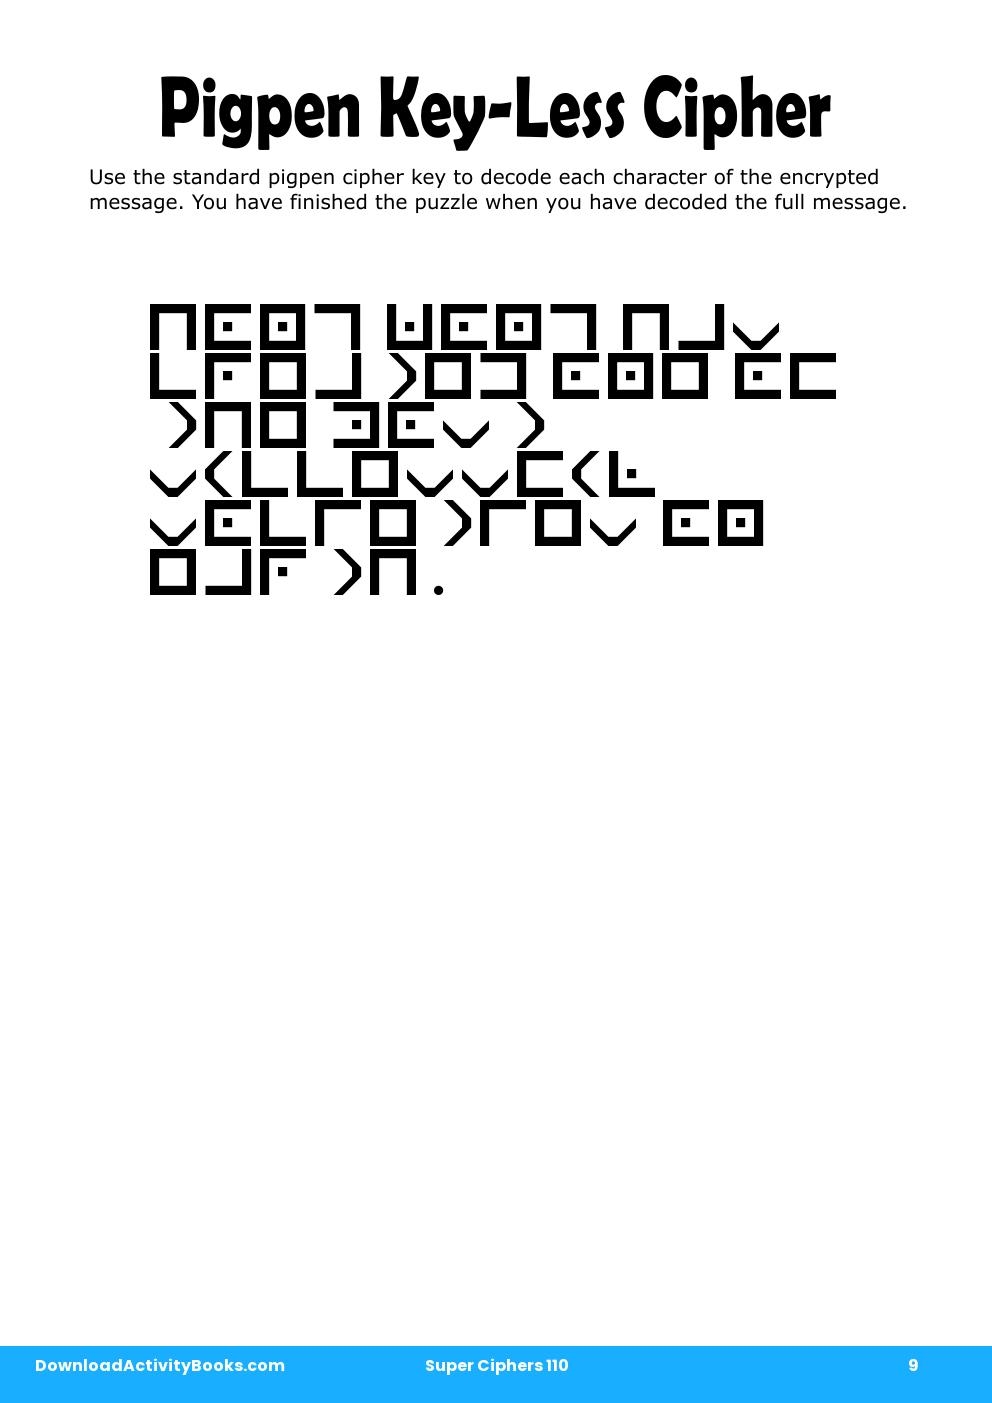 Pigpen Cipher in Super Ciphers 110